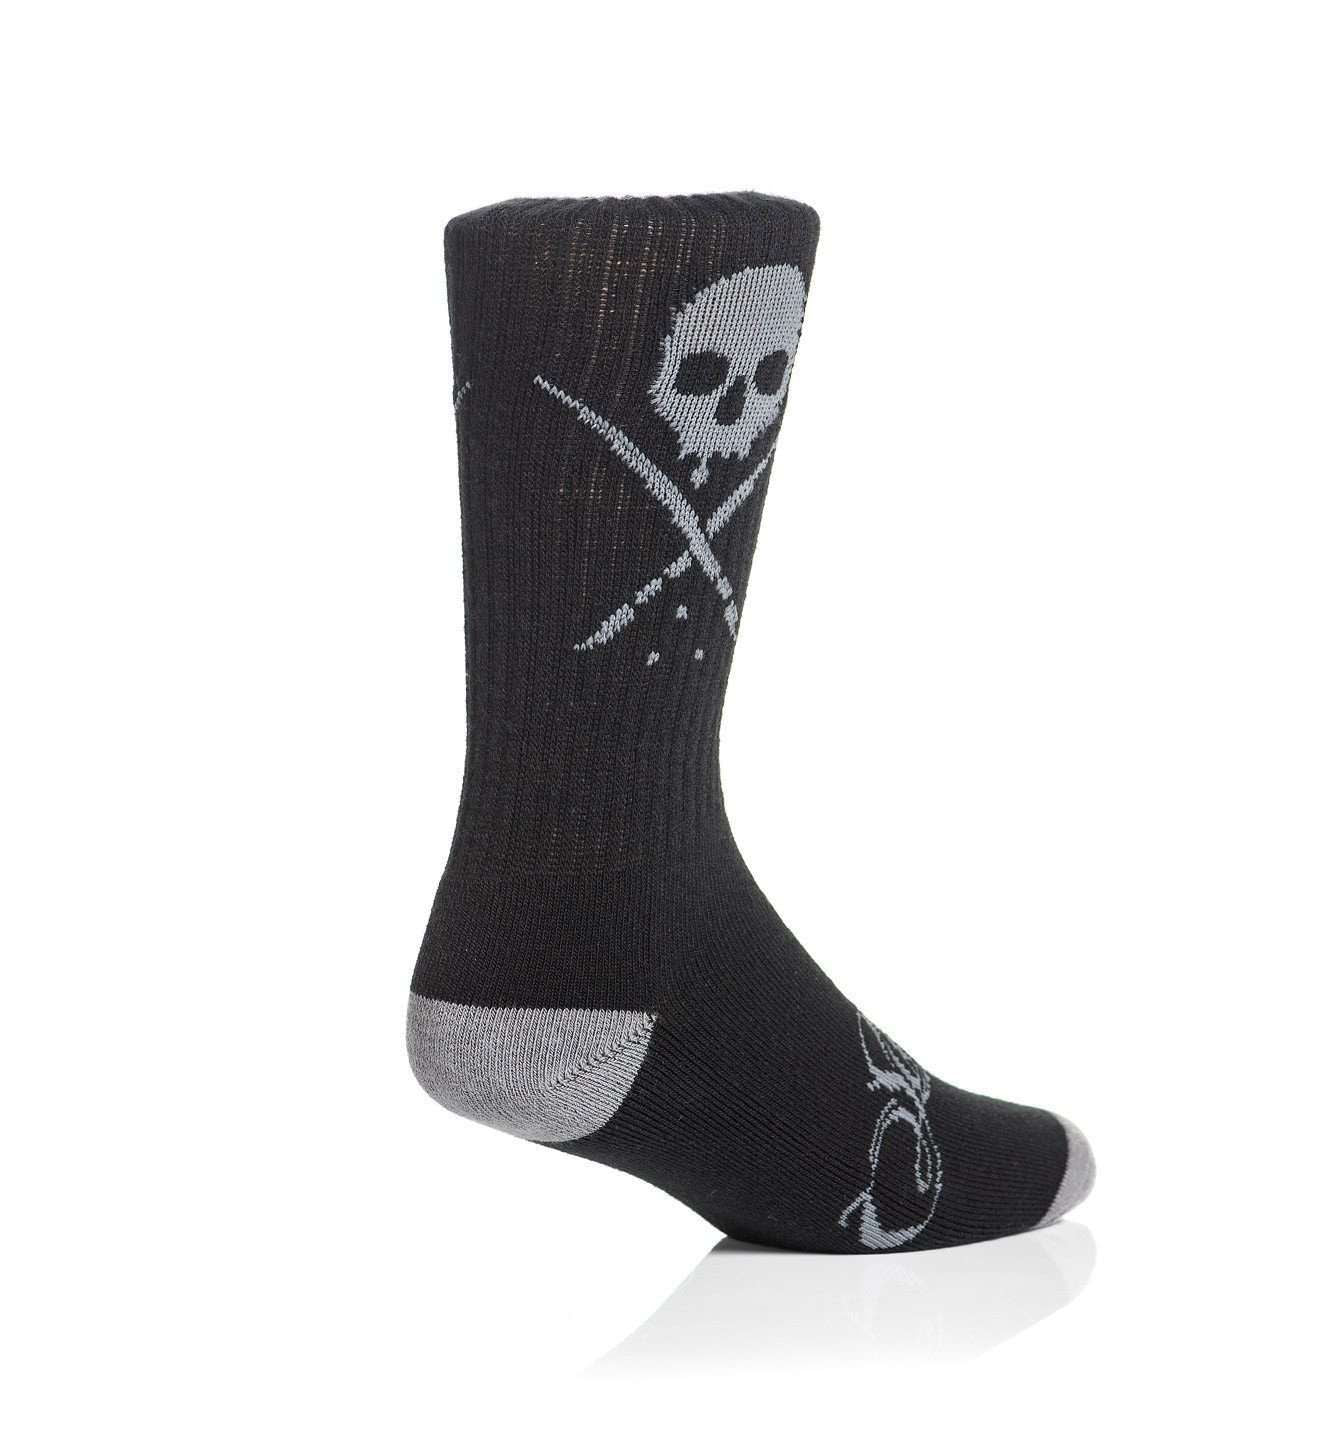 Standard Issue Socks Black/Gray - 